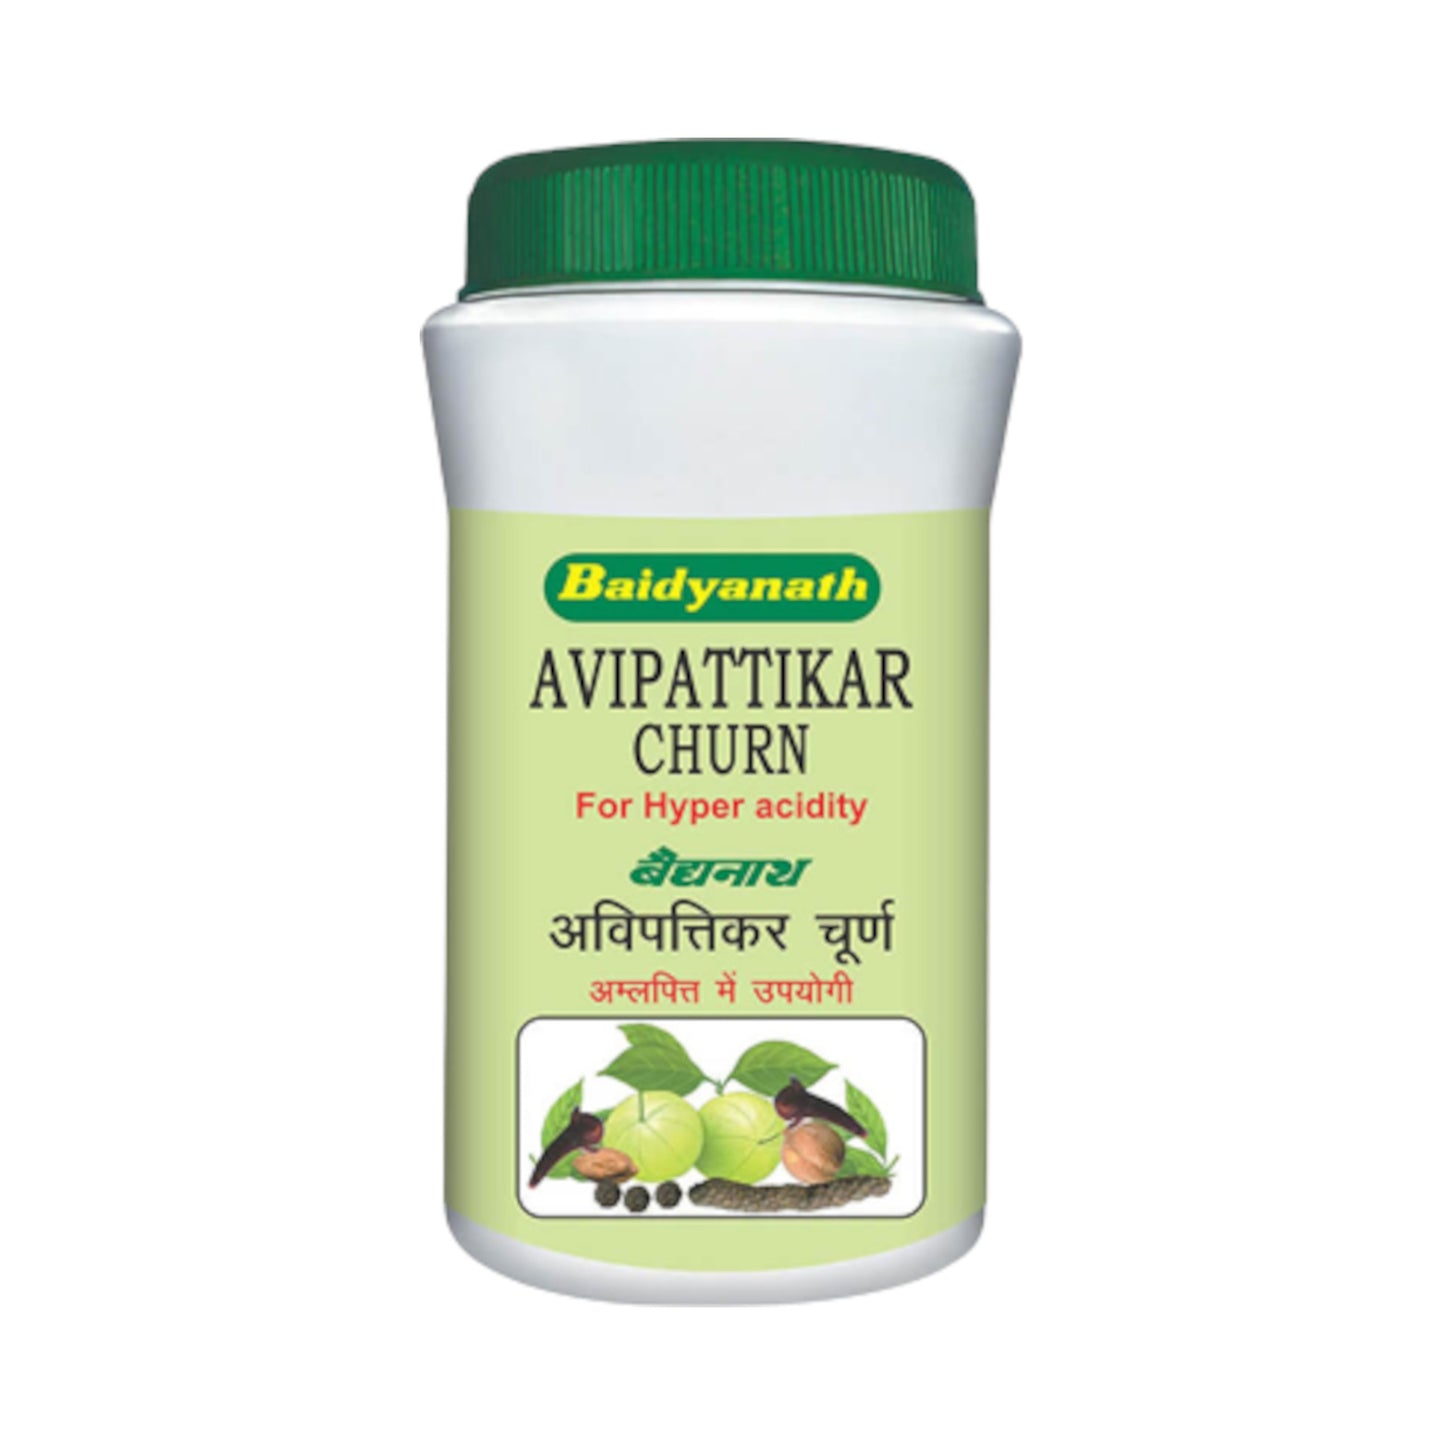 Image: Baidyanath Avipattikar Churna Powder 120g - An Ayurvedic powder for digestive wellness.